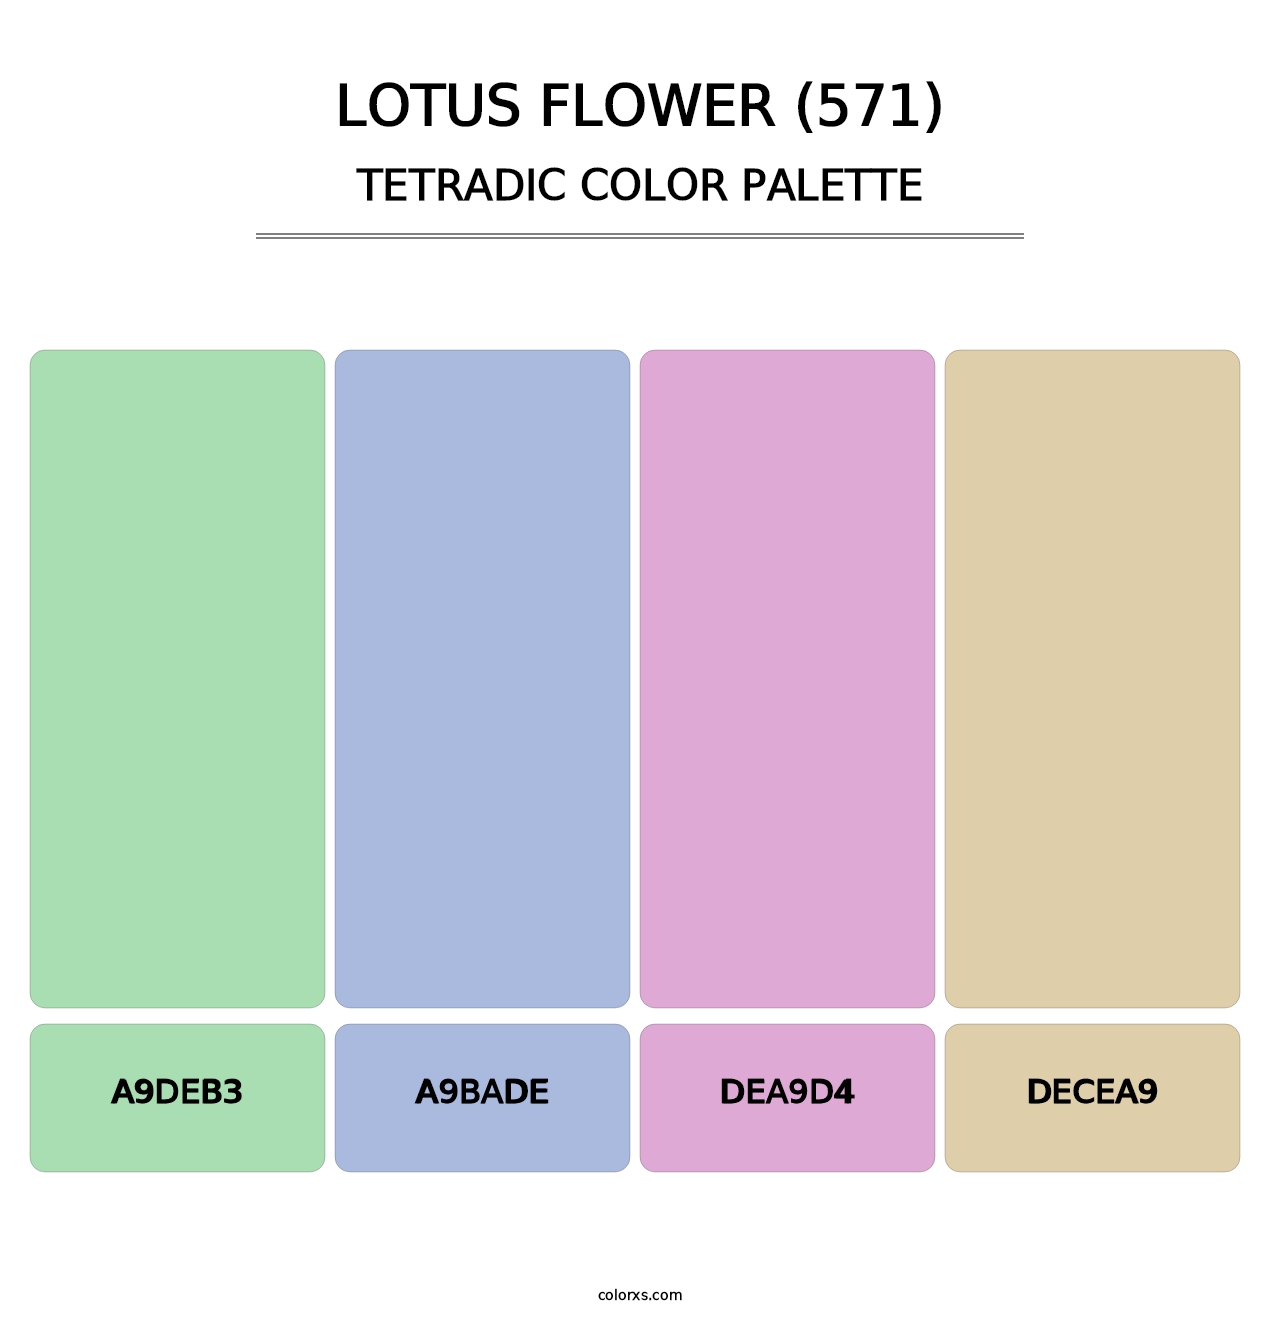 Lotus Flower (571) - Tetradic Color Palette